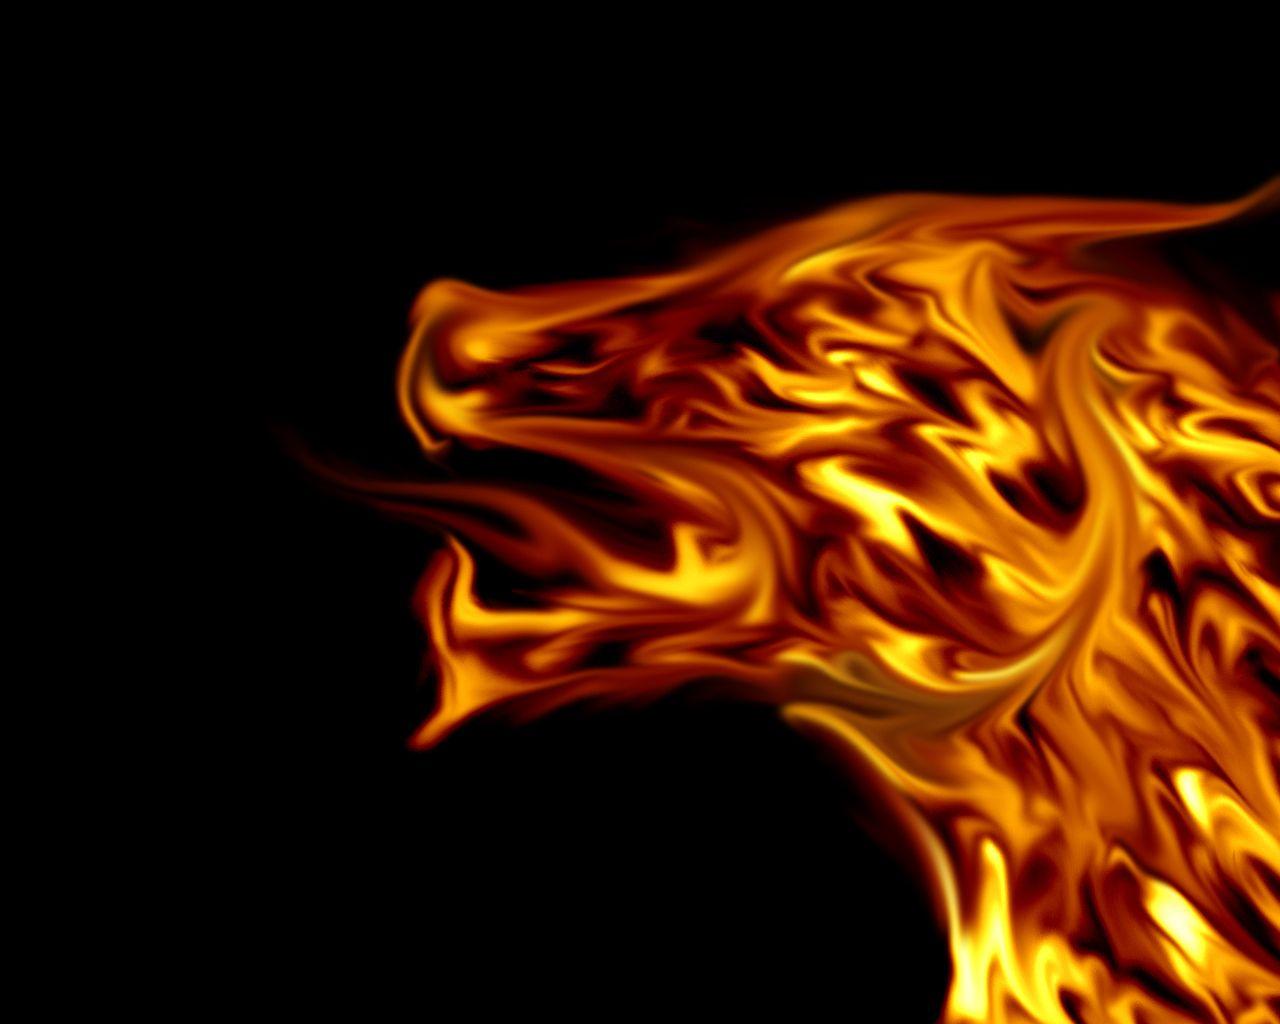 Fire Dragon Wallpaper. Fire!. Fire dragon, Dragons